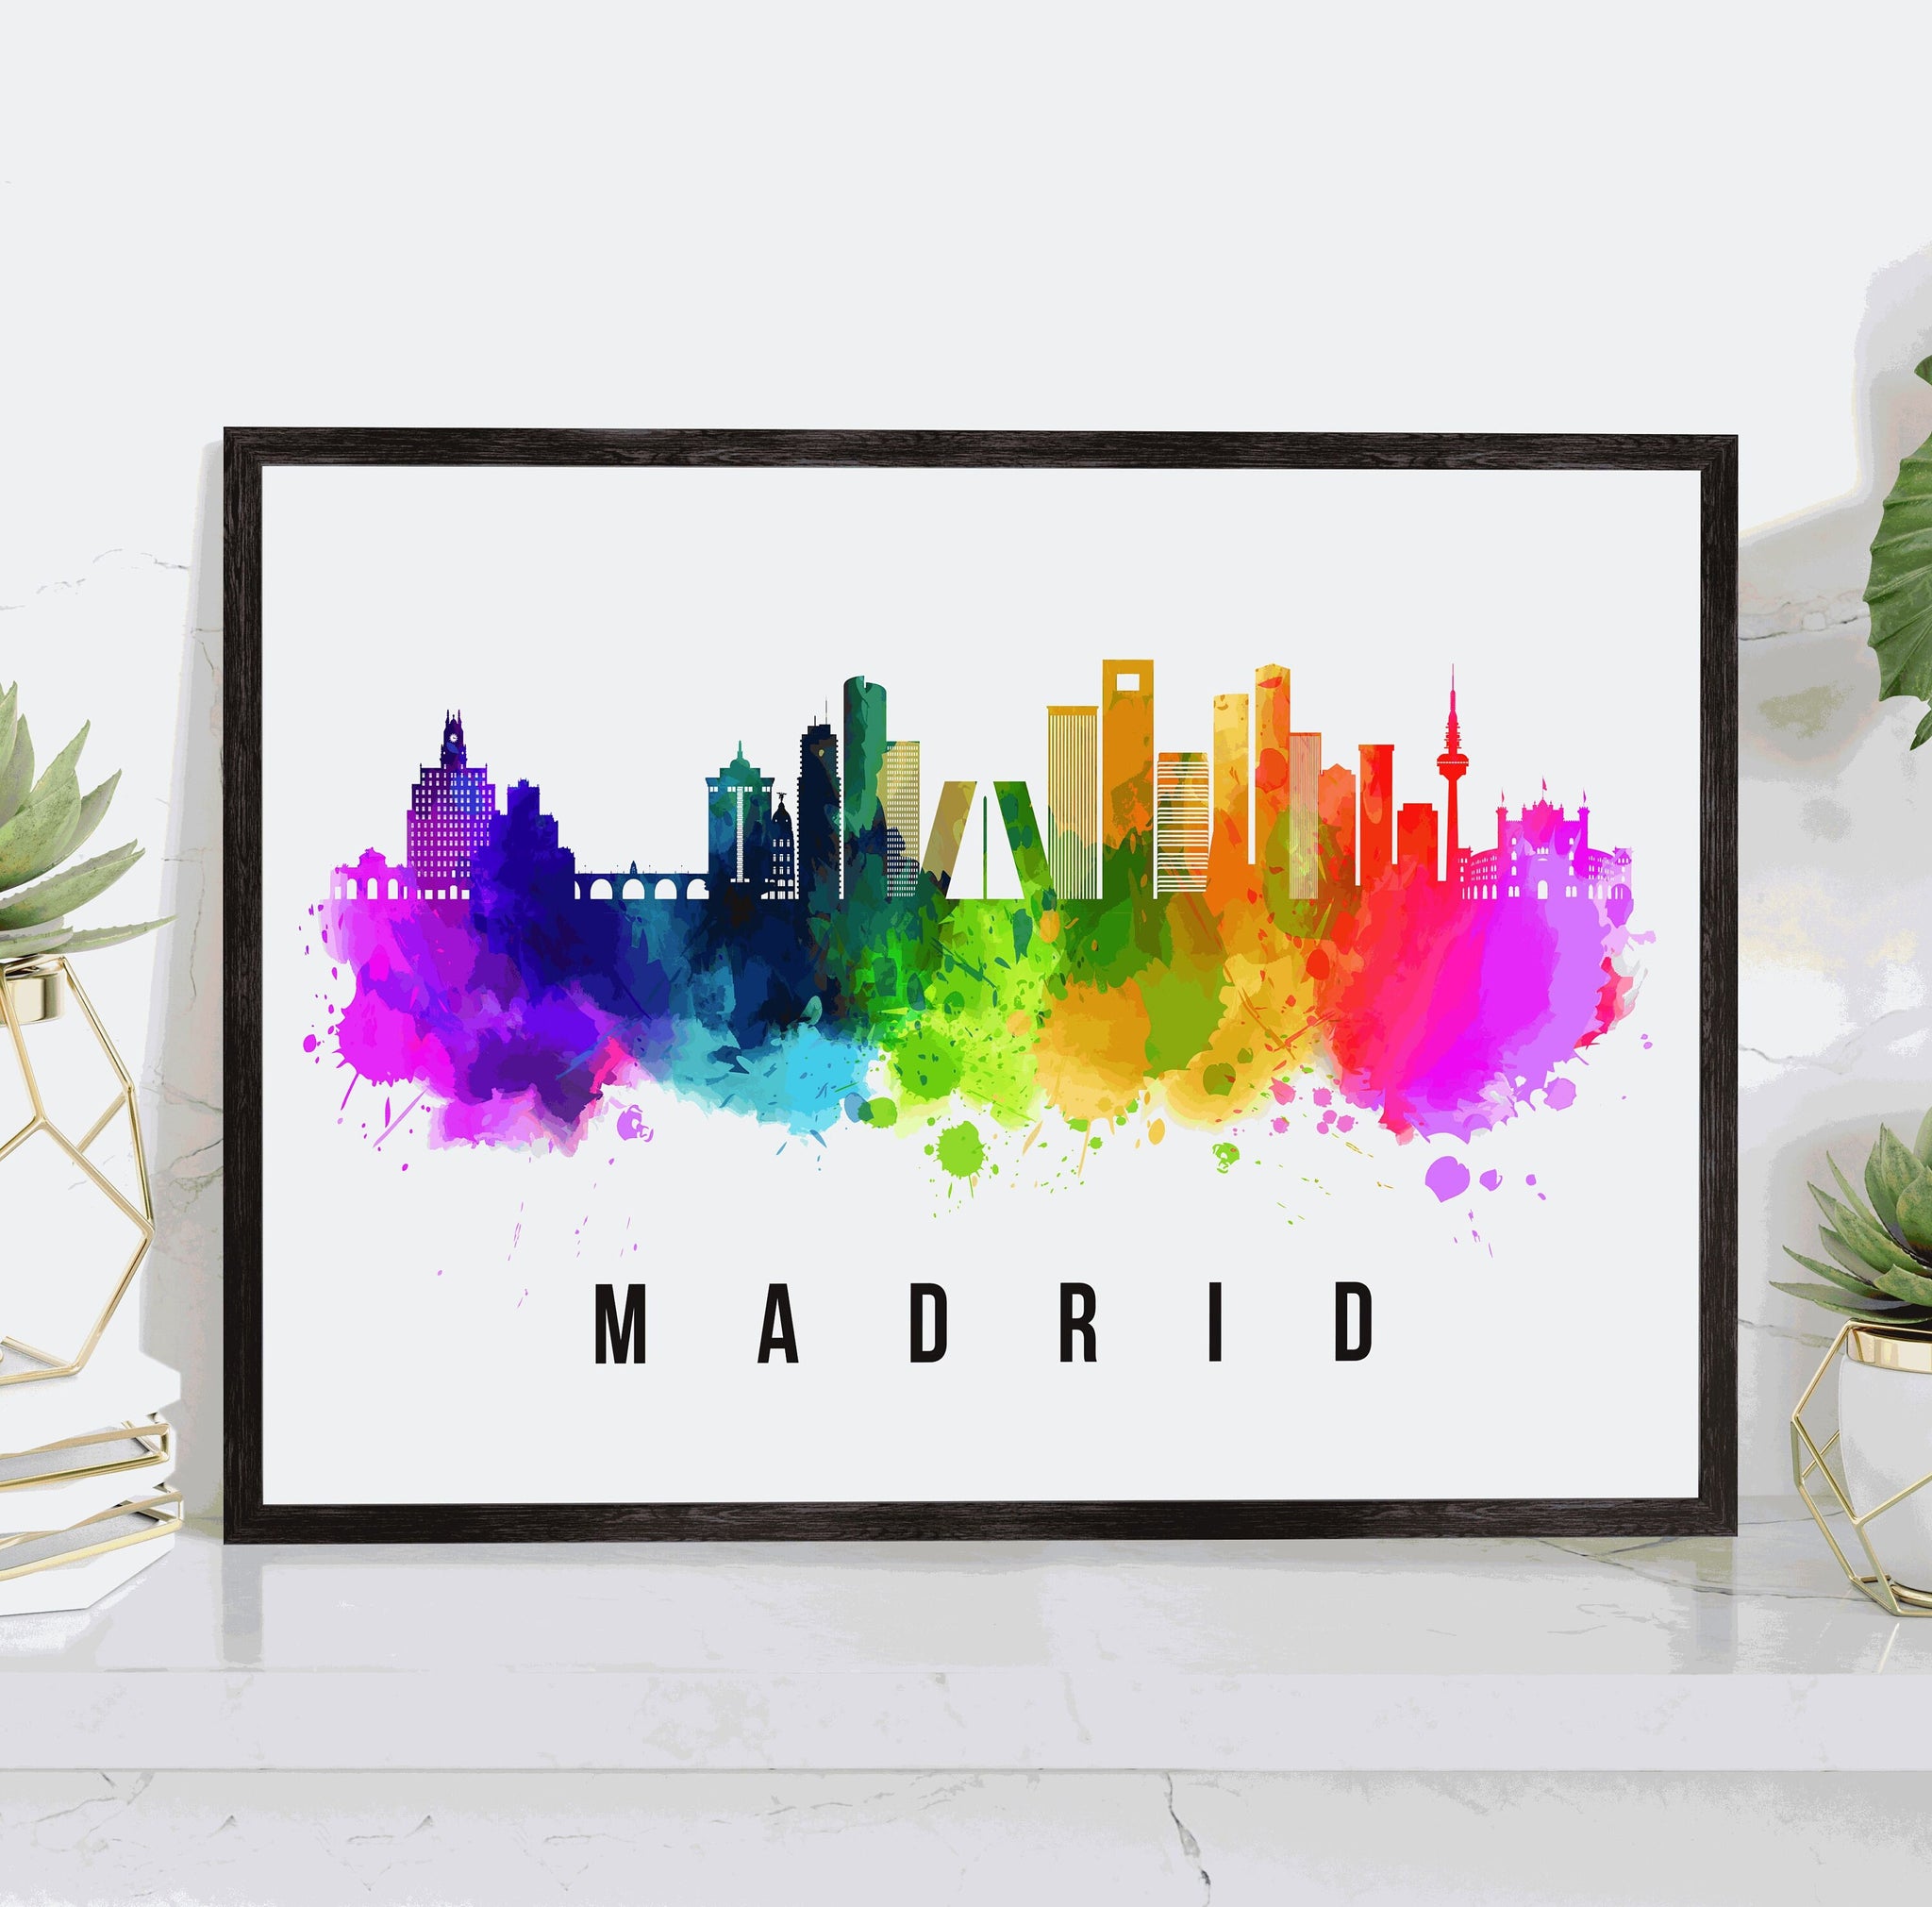 MADRID - SPAIN Poster, Skyline Poster Cityscape and Landmark Madrid Illustration Home Wall Art, Office Decor